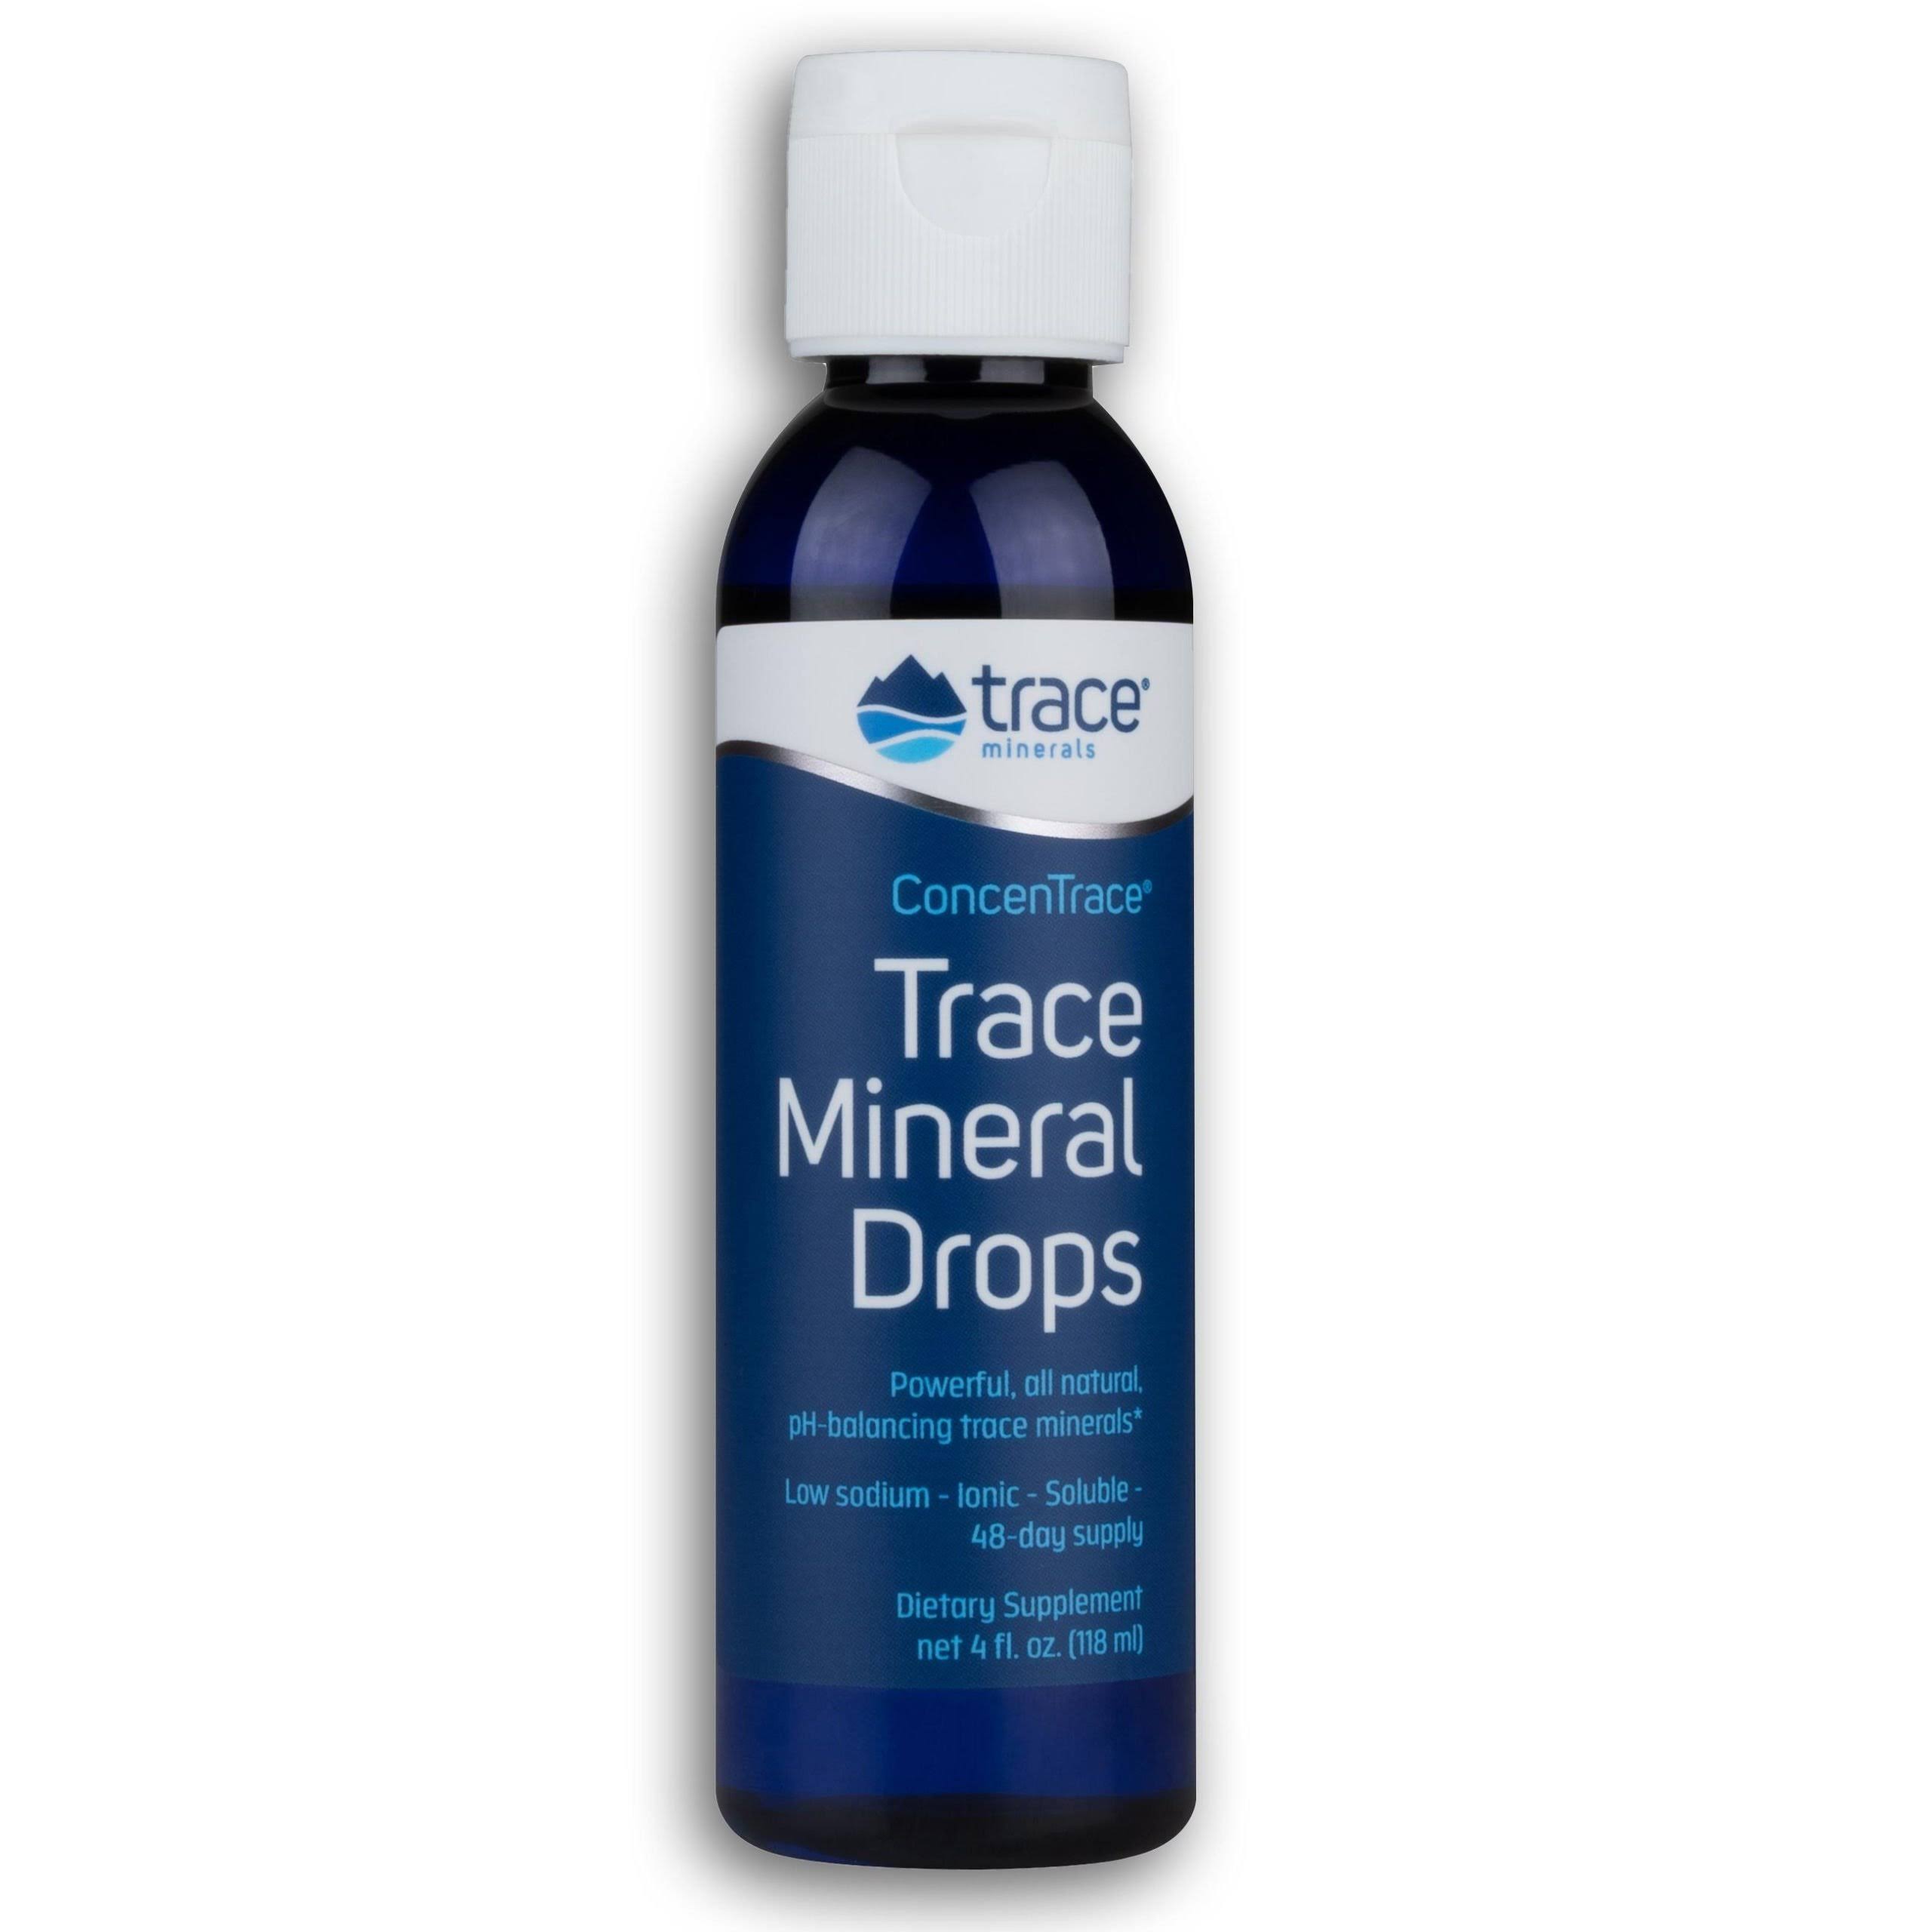 Trace Minerals Concentrace Trace Mineral Drops - 8oz